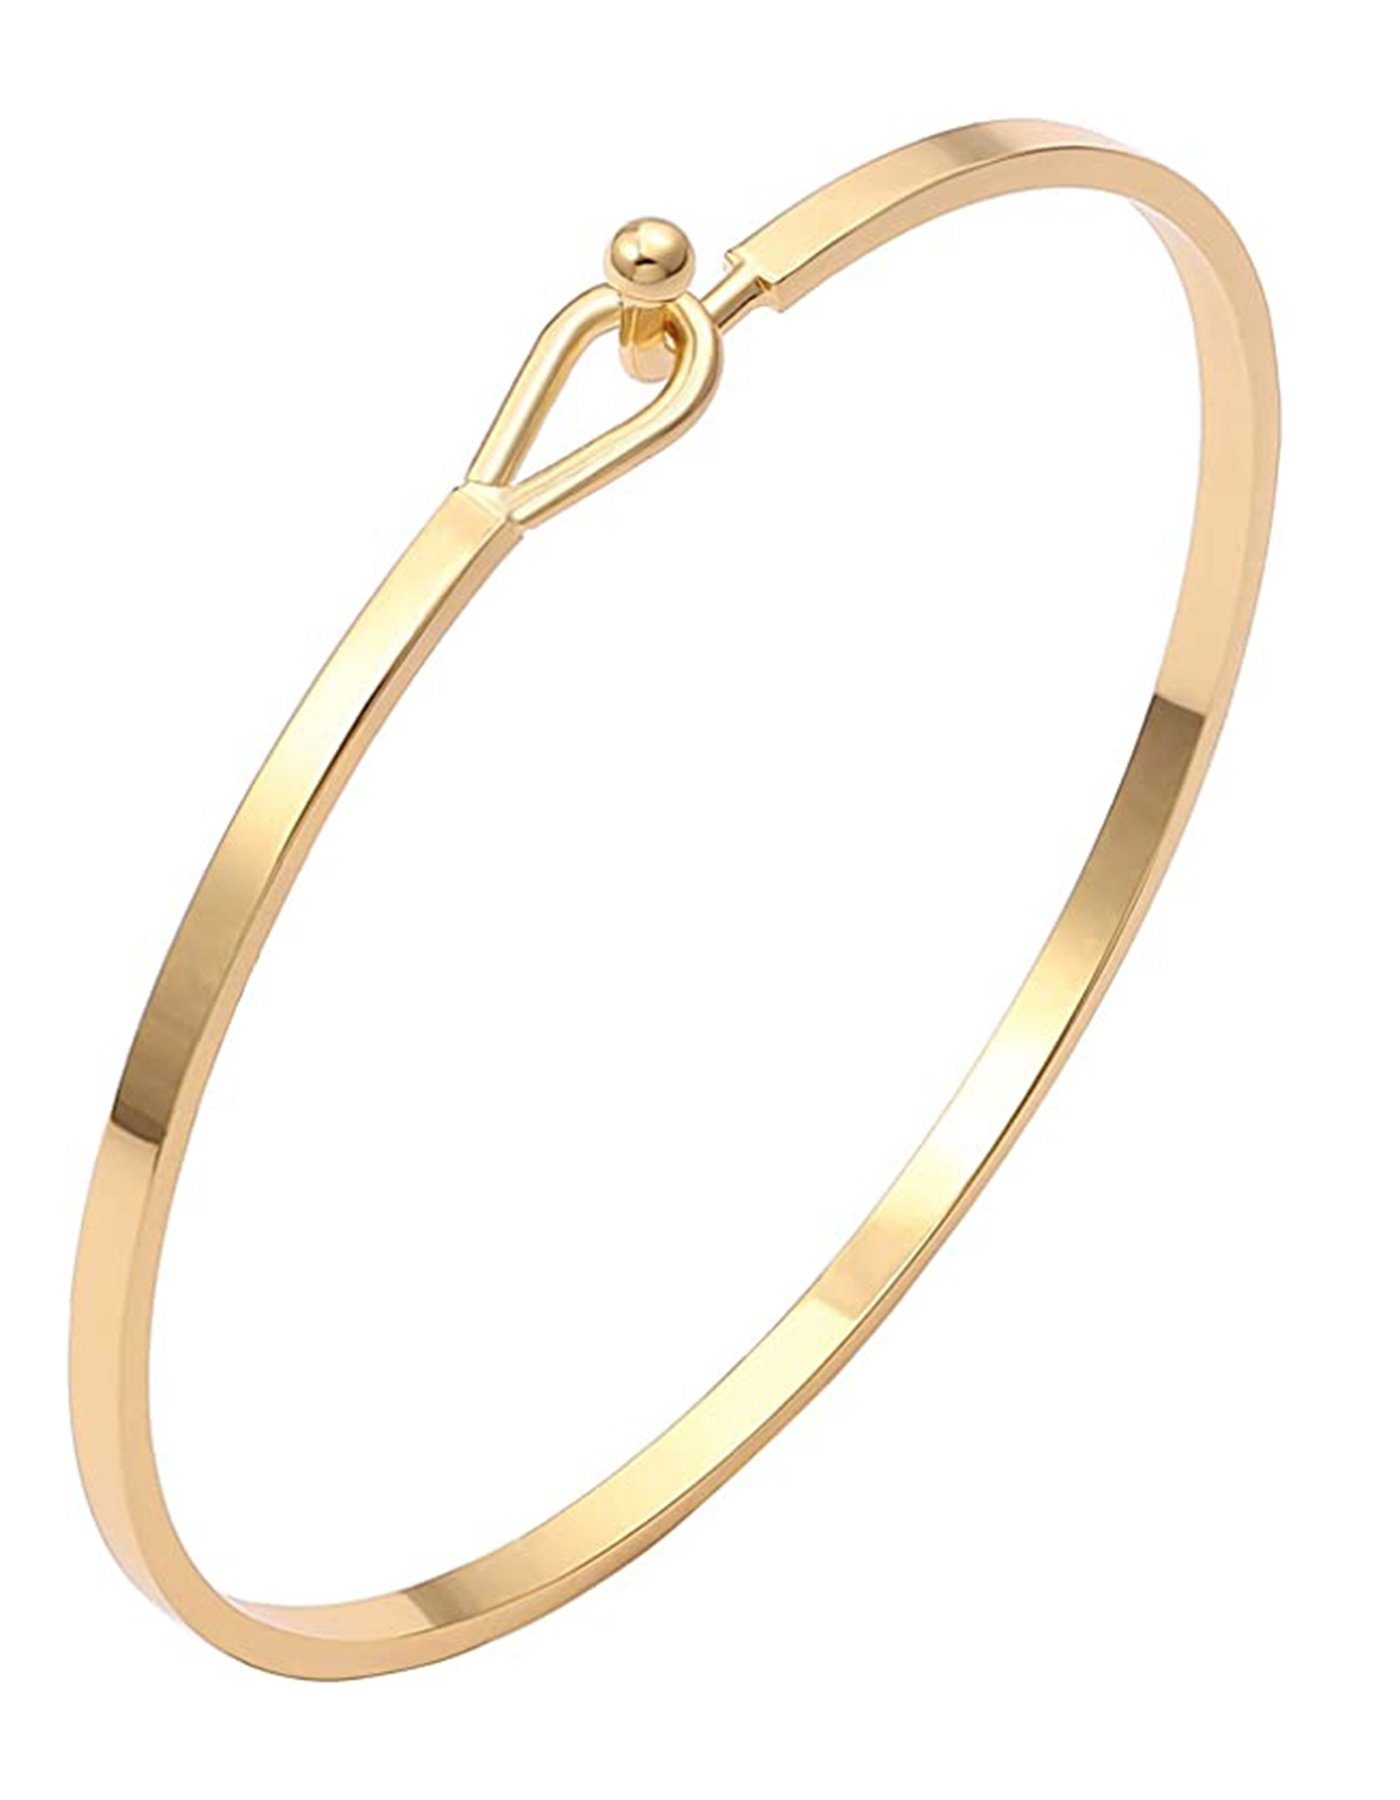 Haiaveng Armkette Einfache zarte dünne Manschette Armreif Haken Armband  Gold, Handgefertigten minimalistischen Schmuck,Dainty Gold Bar Armband